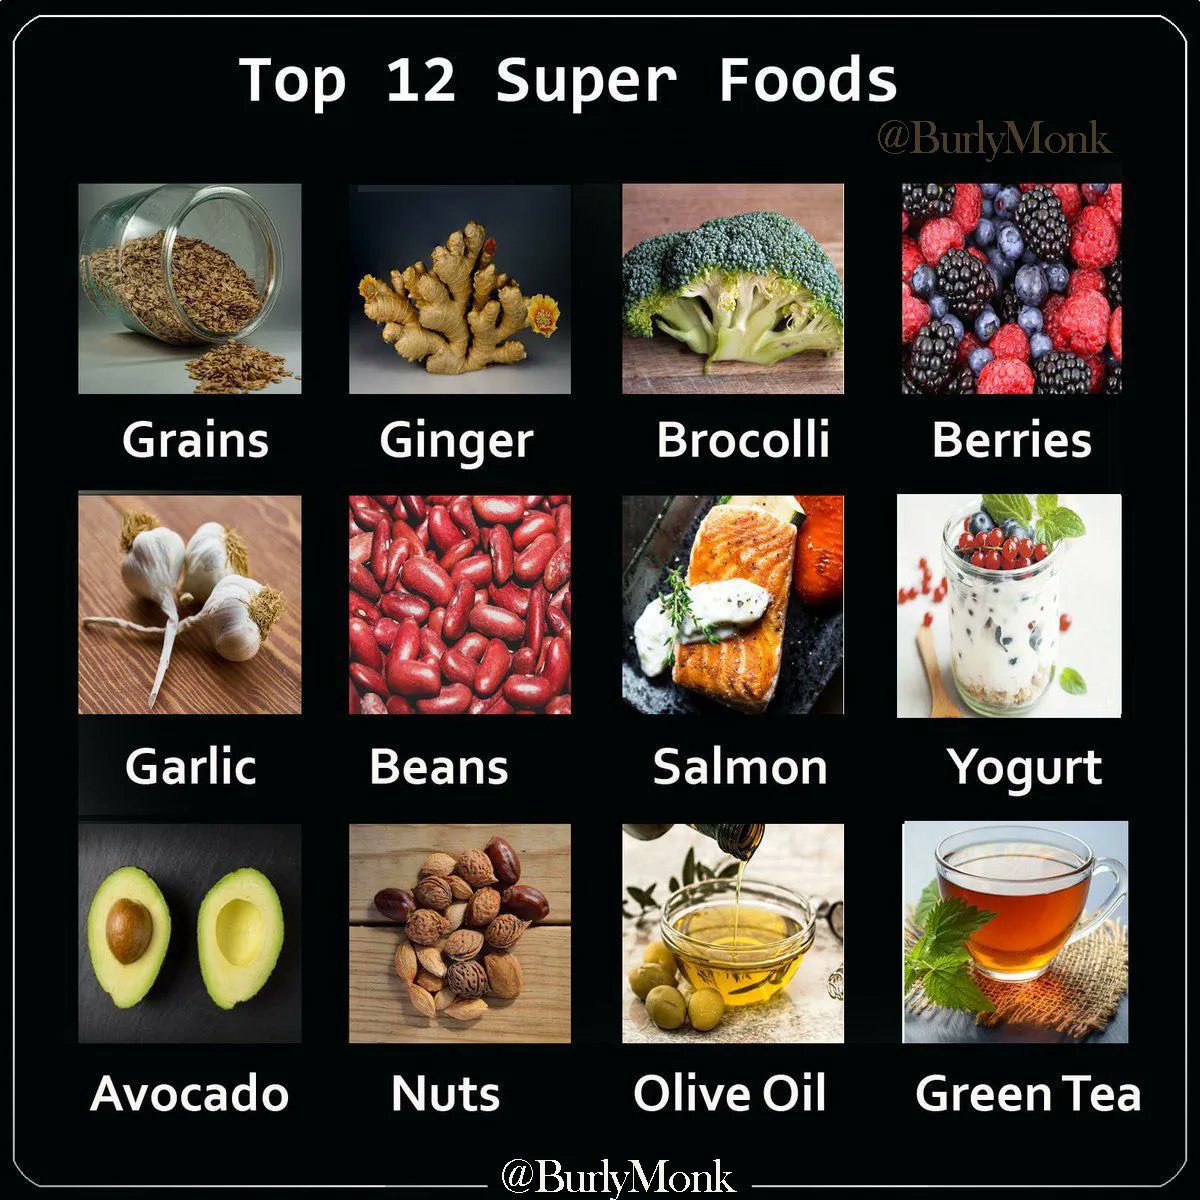 12 Super Foods we should add to our diet #Nutrition #SuperFoods #Mediterraneandiet  #Health #NutritionIsMedicine